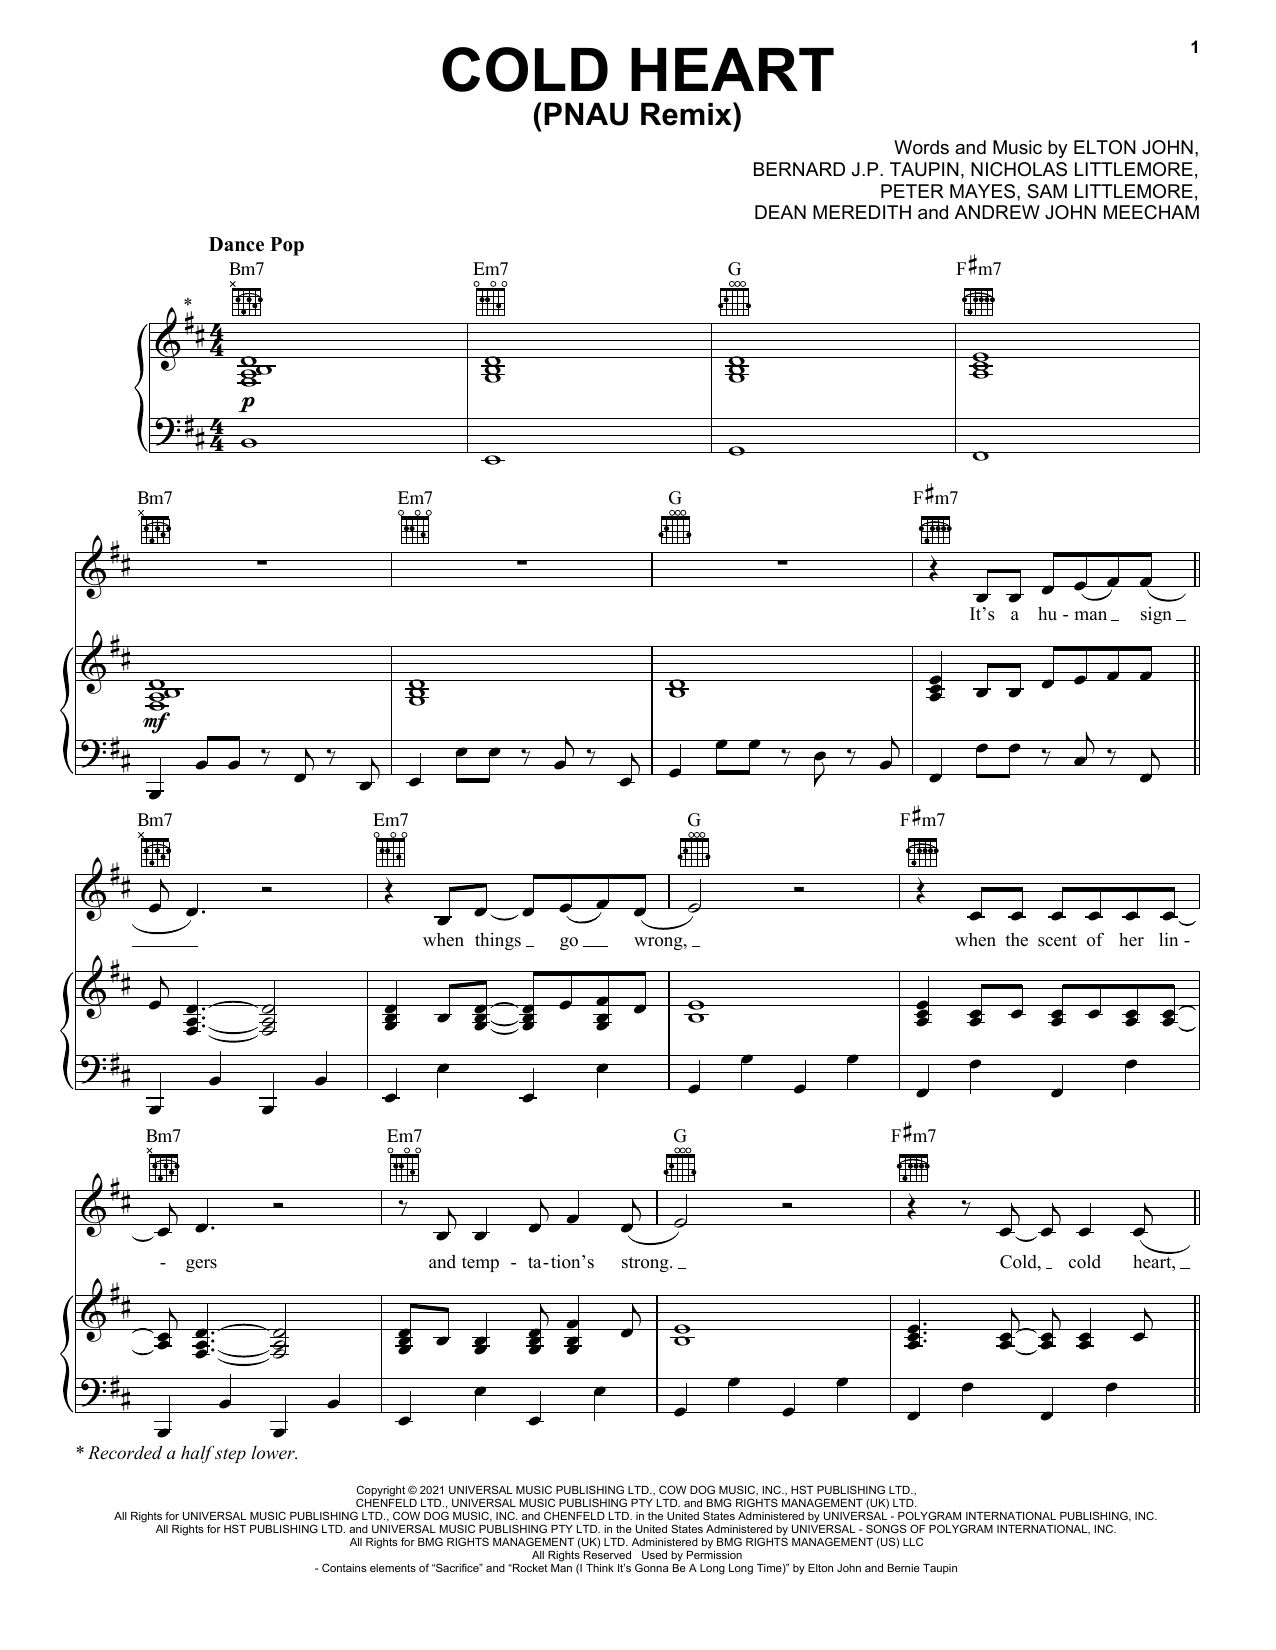 Elton John & Dua Lipa Cold Heart (PNAU Remix) Sheet Music Notes & Chords for Piano, Vocal & Guitar (Right-Hand Melody) - Download or Print PDF